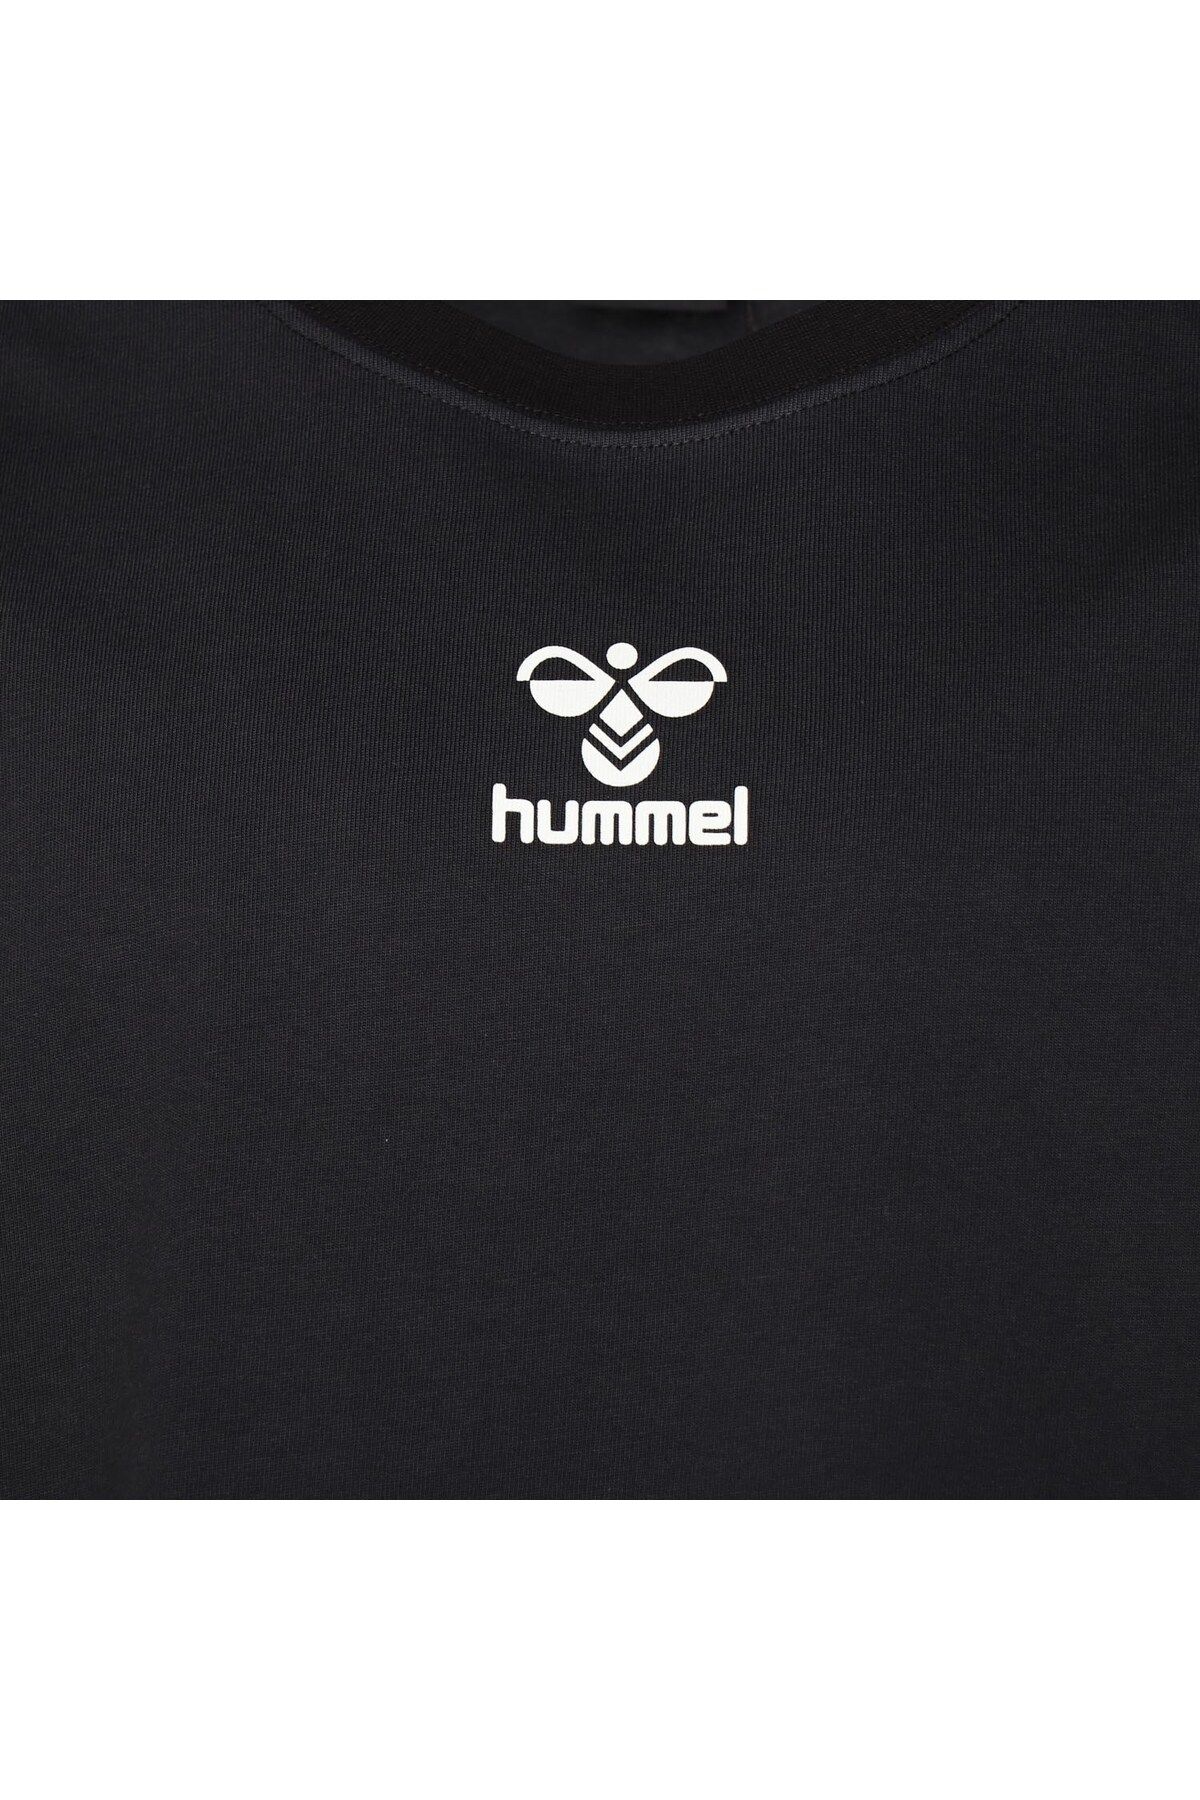 hummel تی شرت بزرگ S/S Turns ورزشی Hummelyns